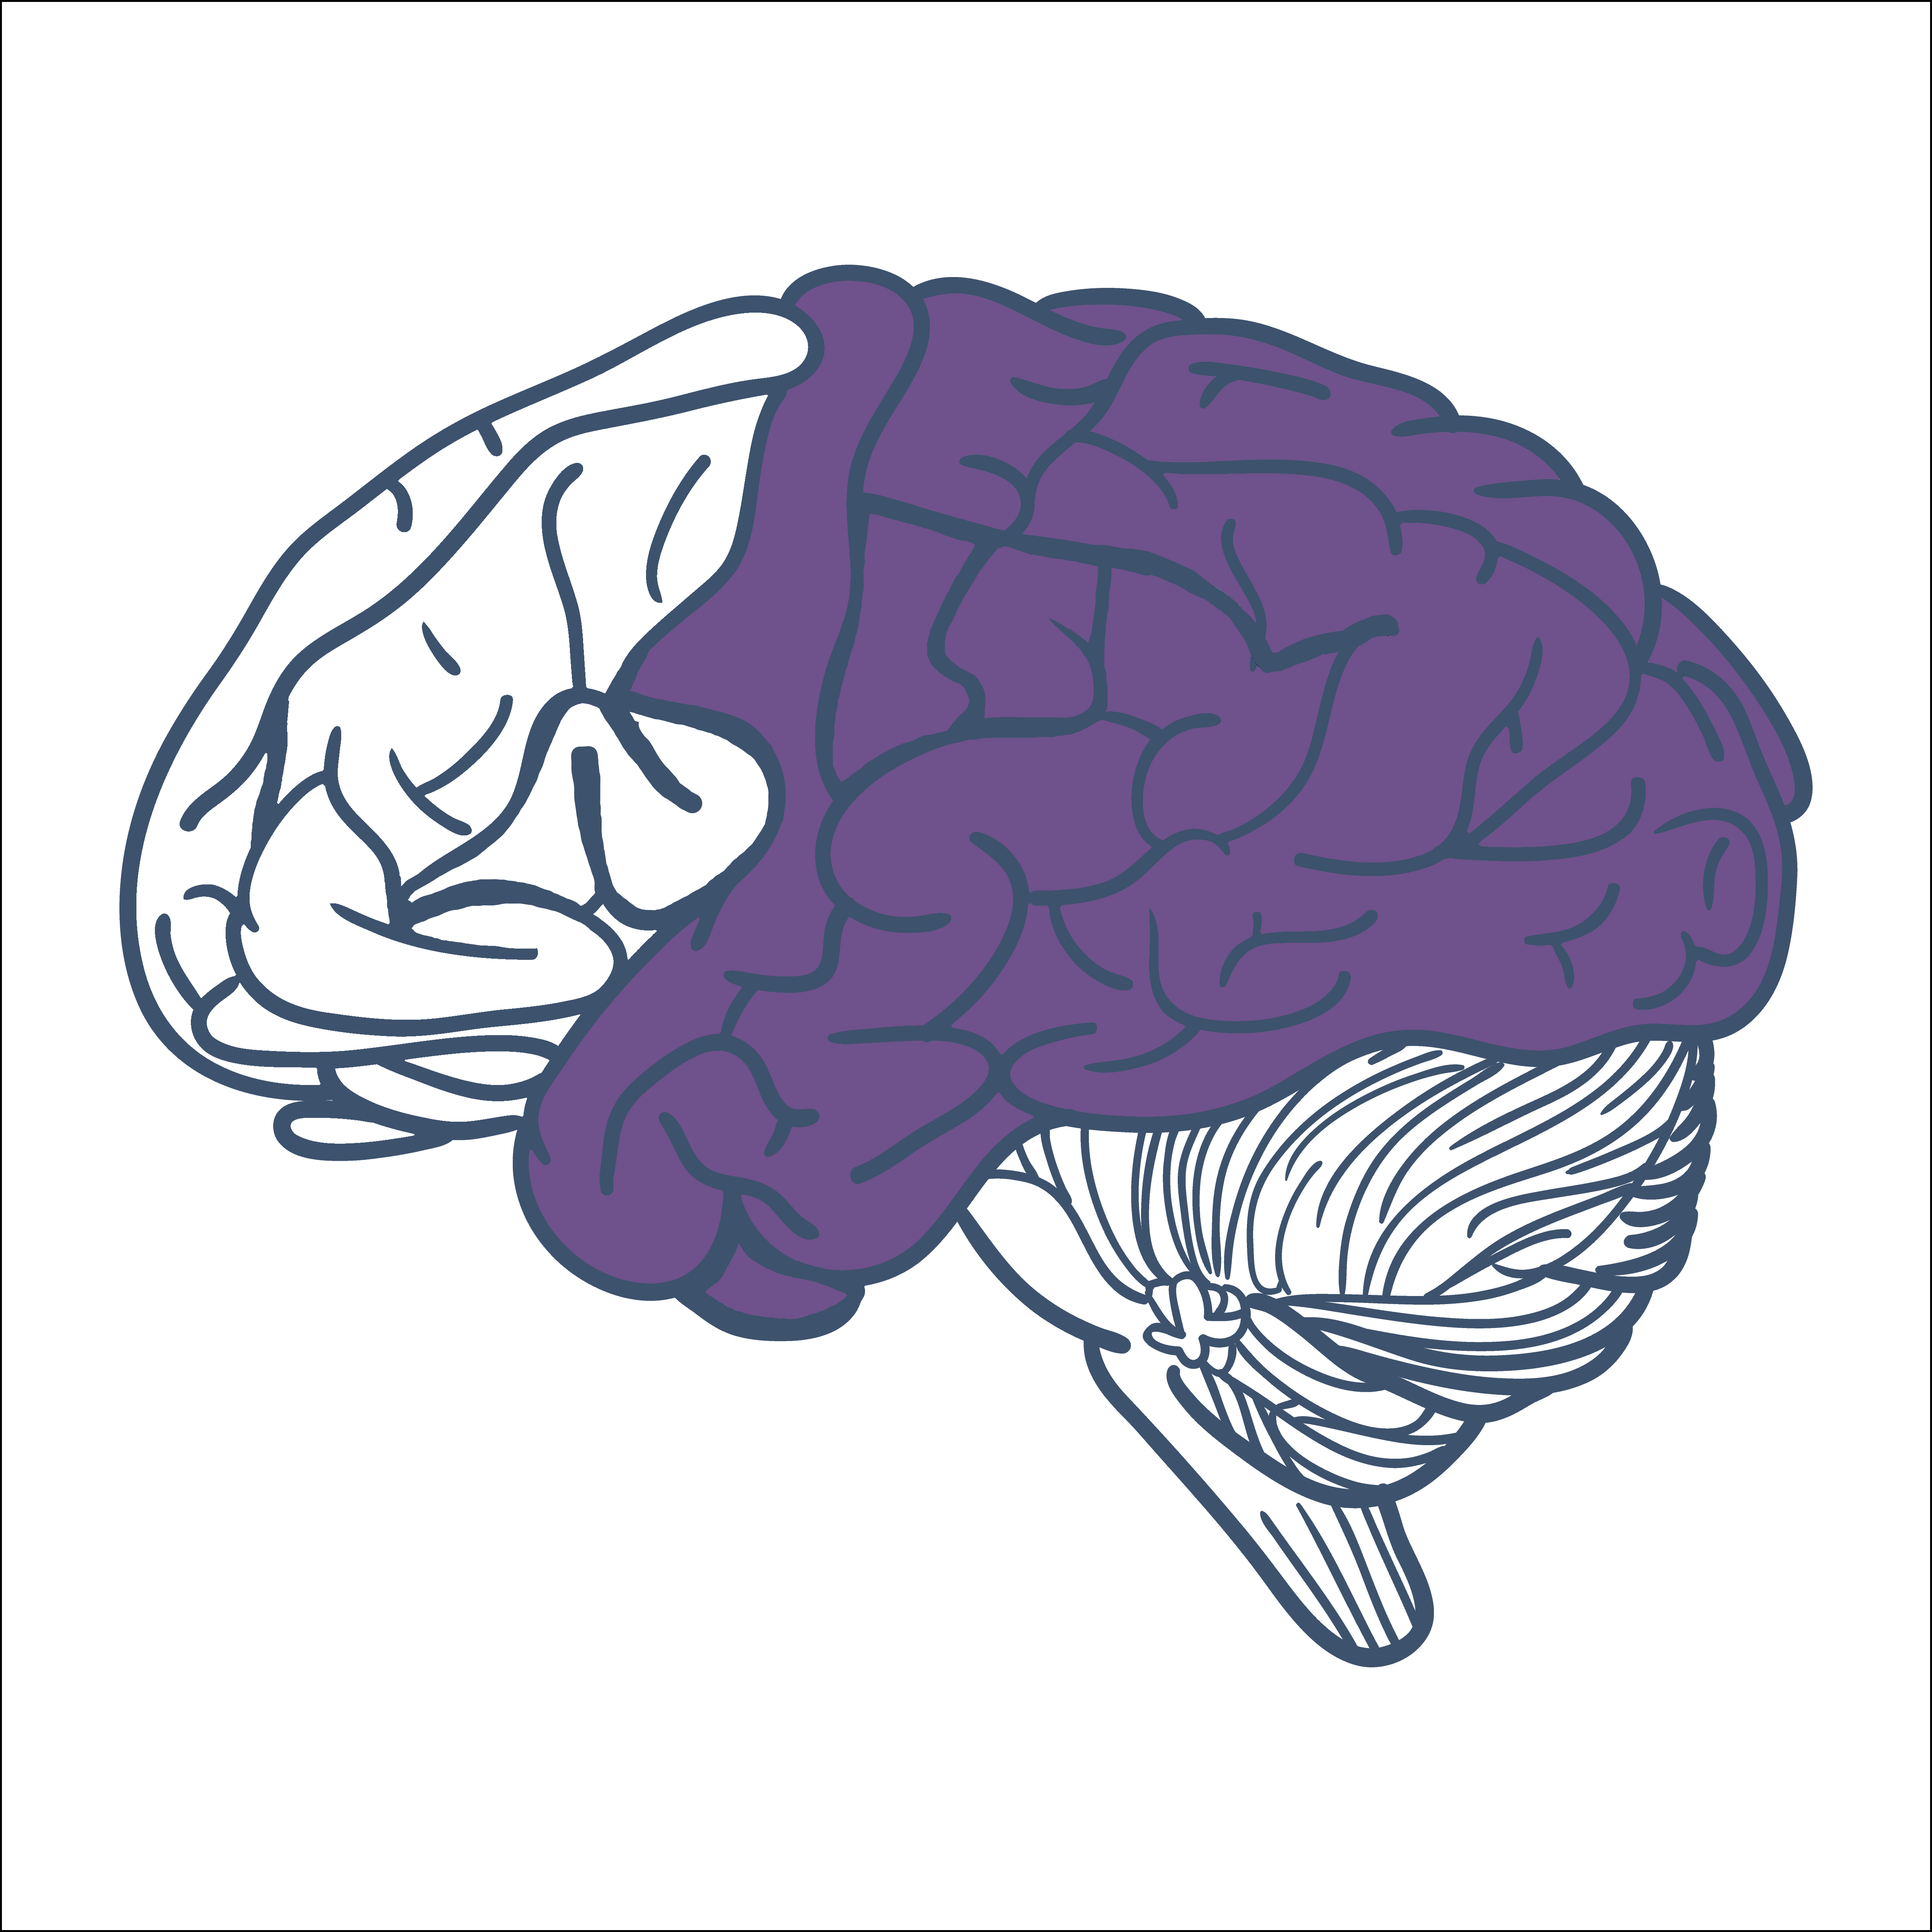 purple circle around affective network part of brain